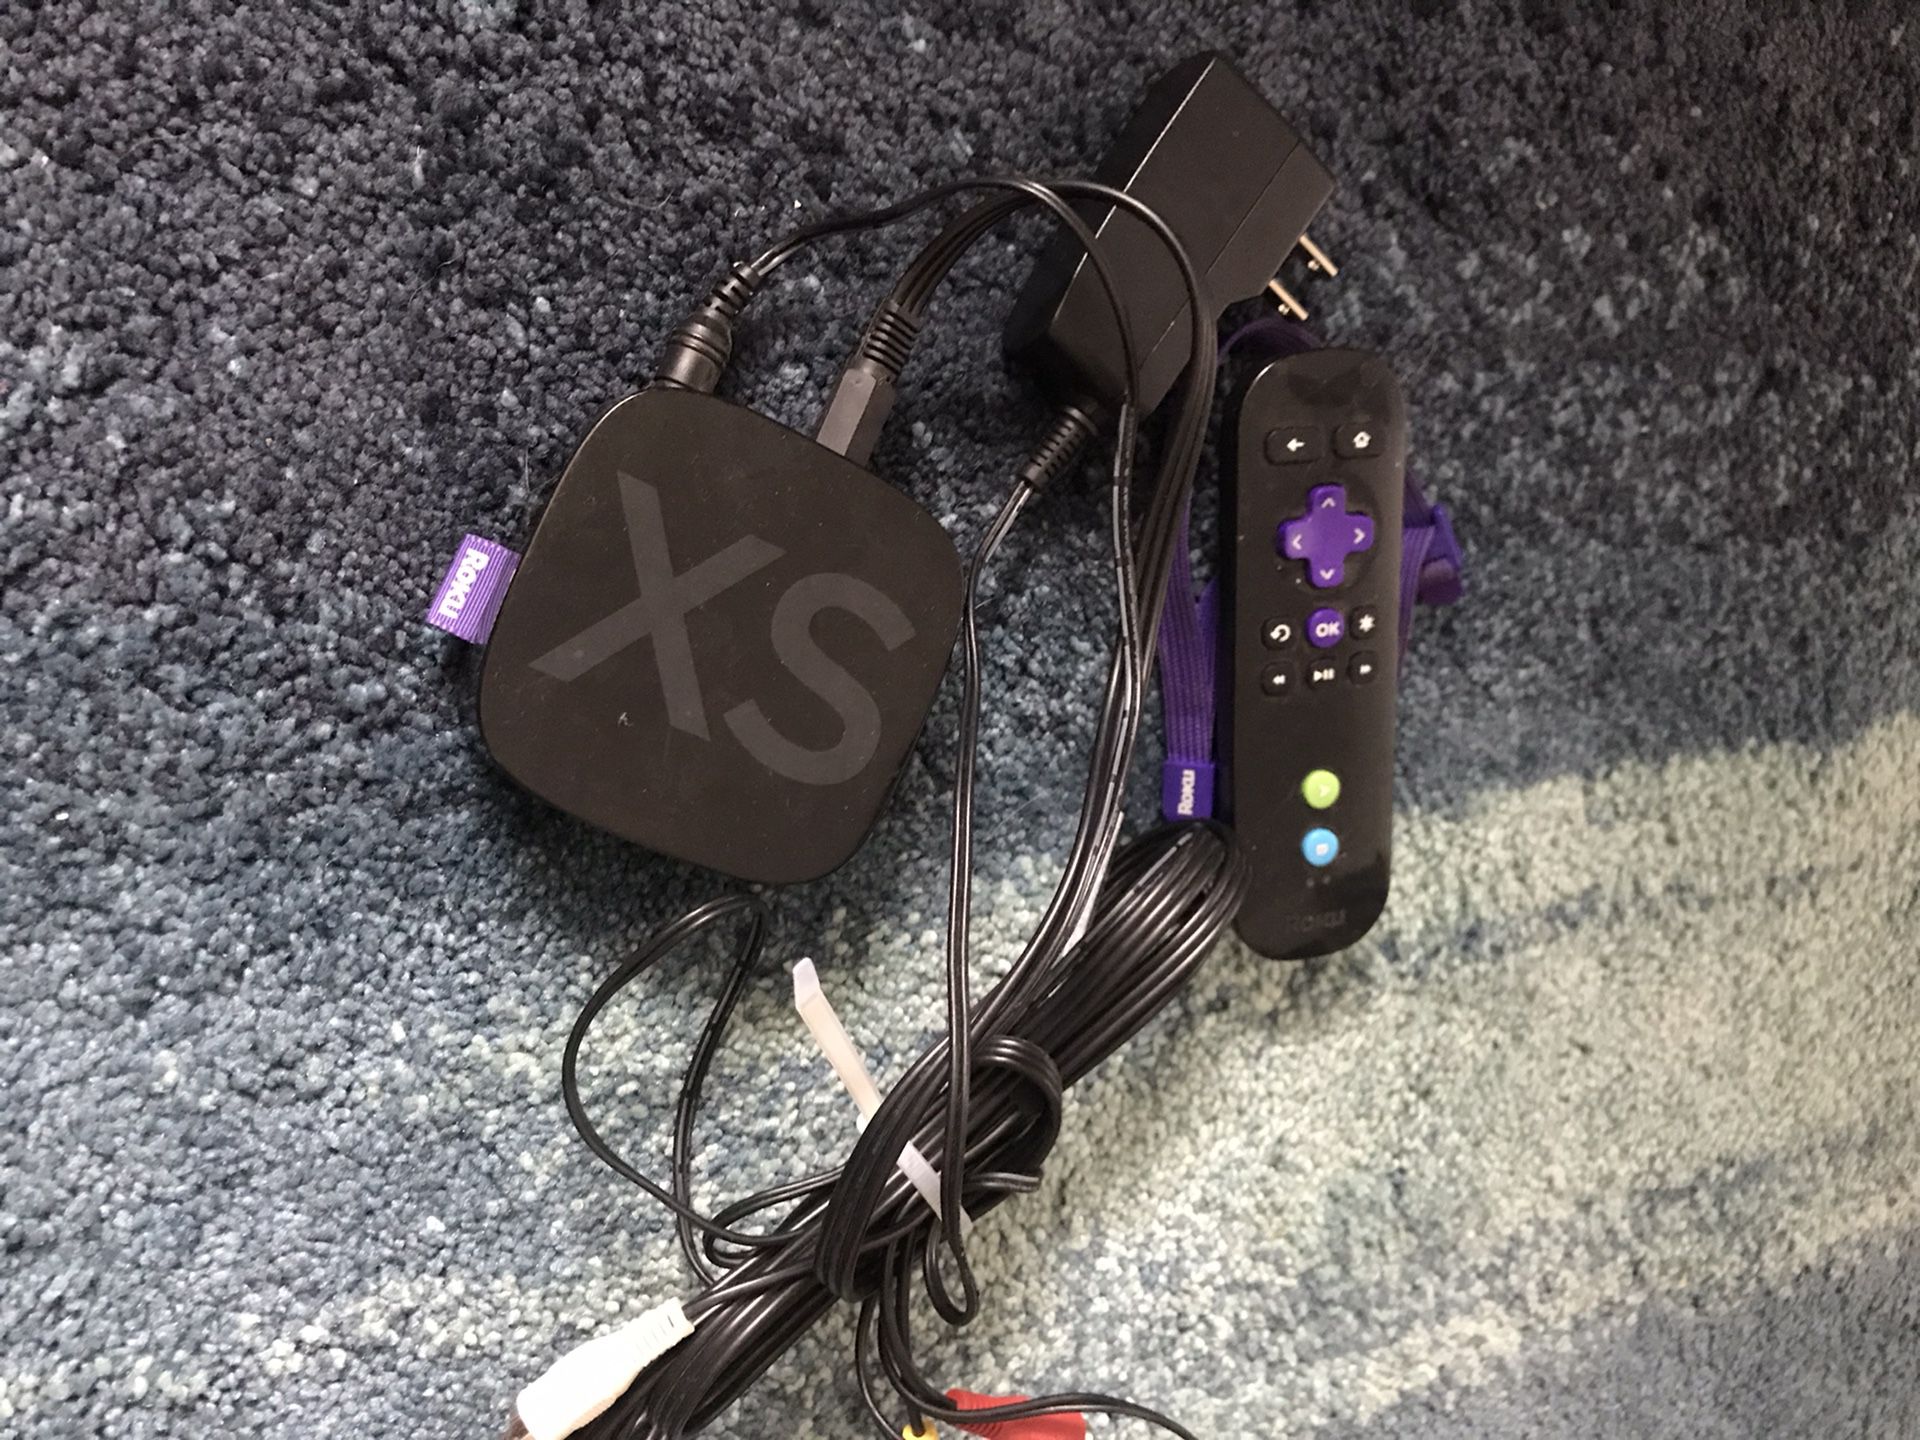 Roku 3 XS with remote